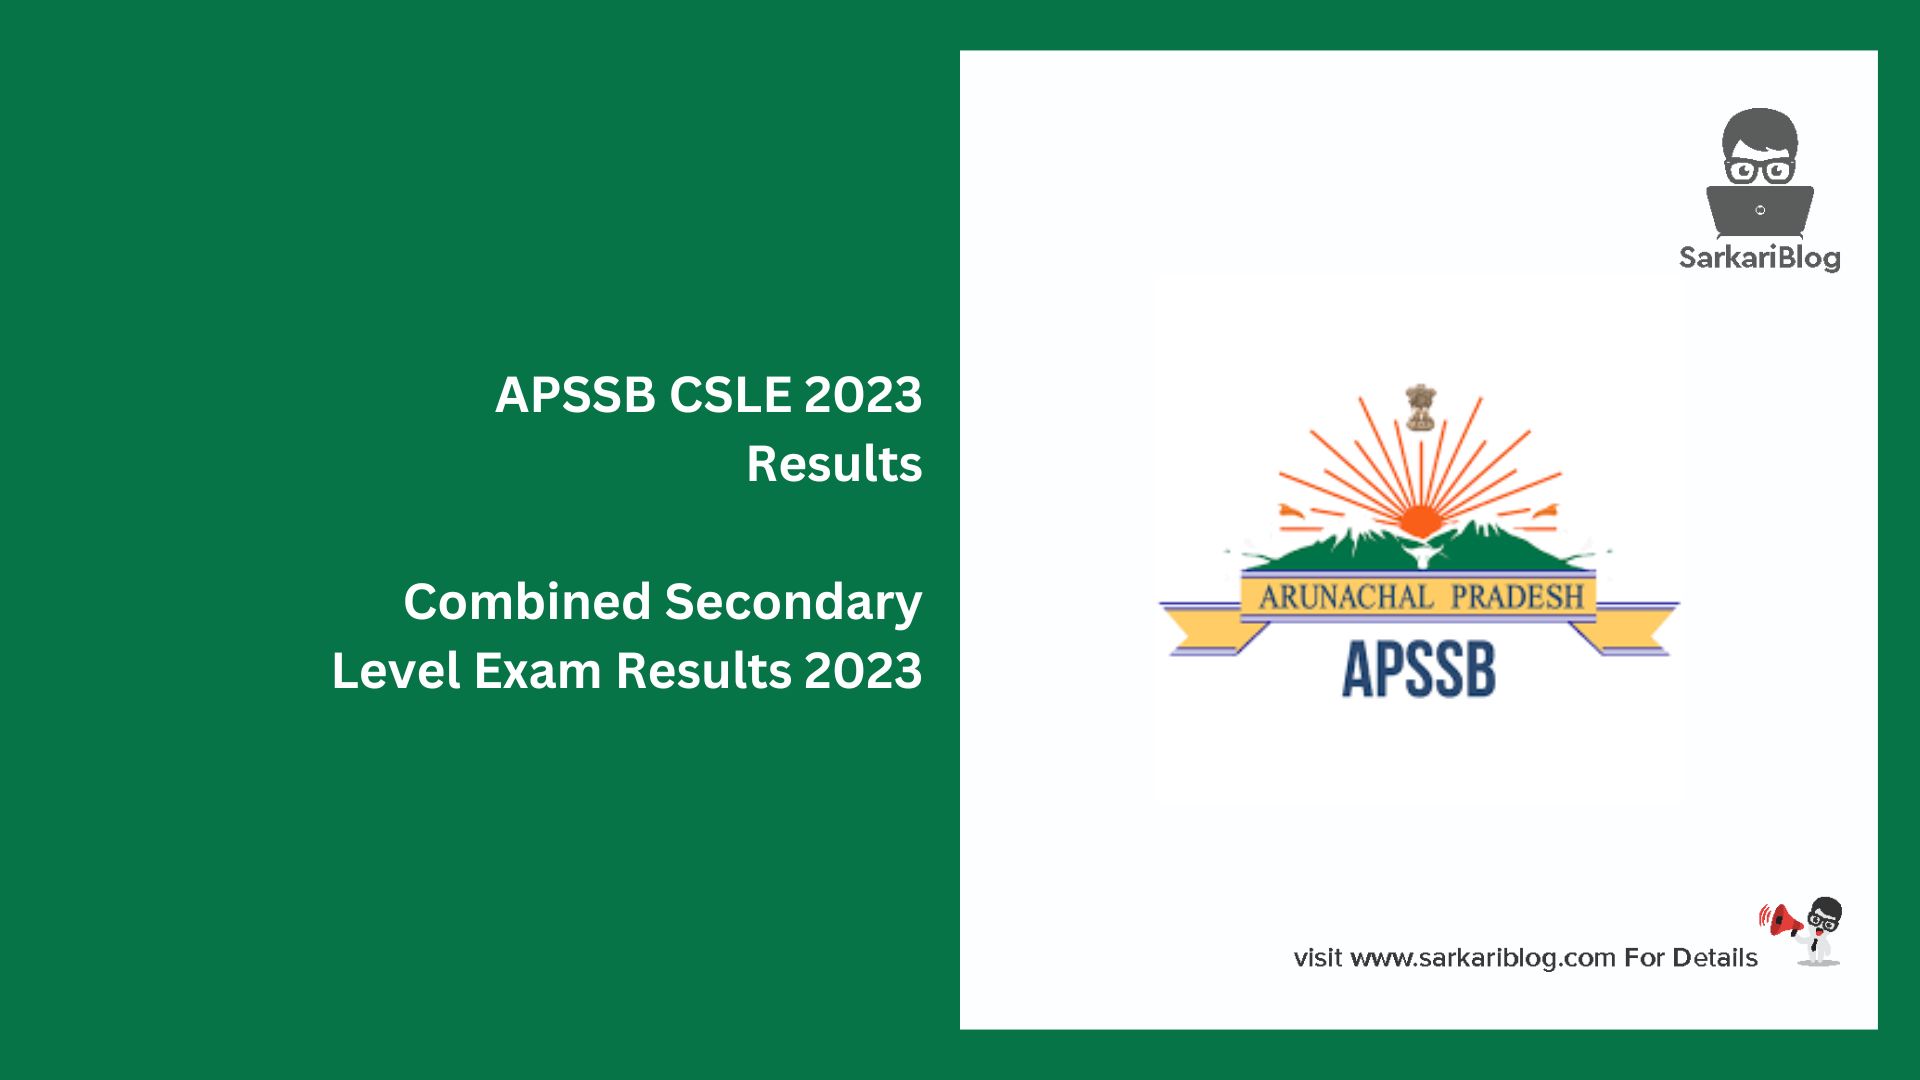 APSSB CSLE 2023 Results